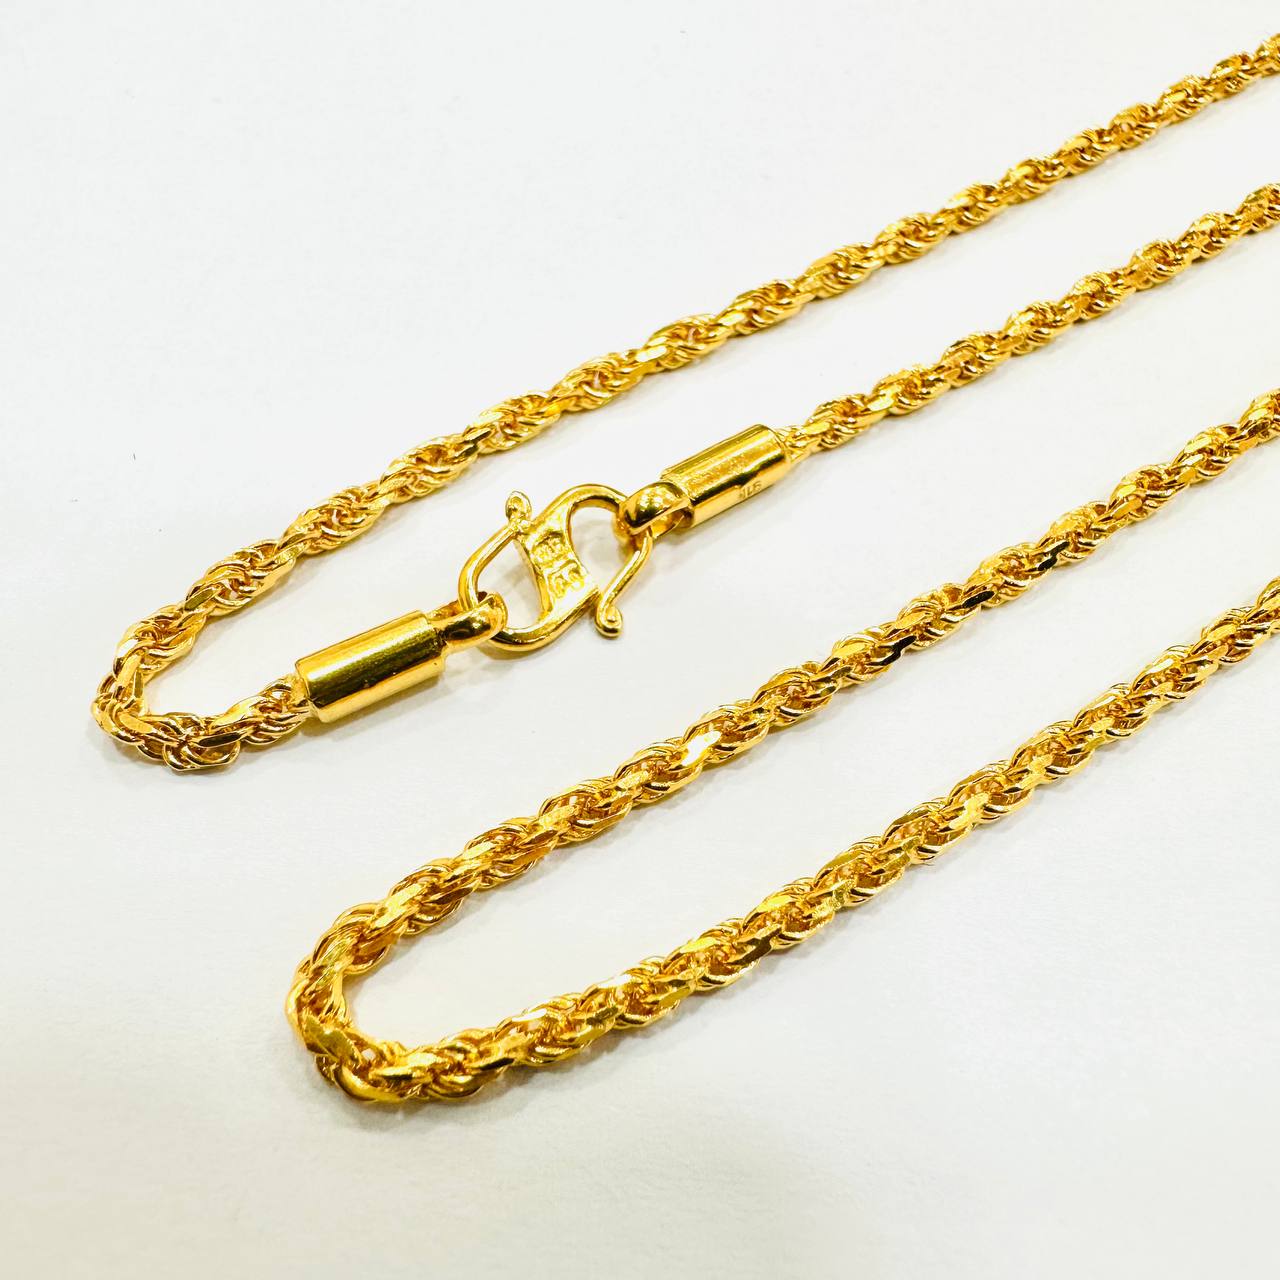 22k / 916 gold solid rope necklace-916 gold-Best Gold Shop